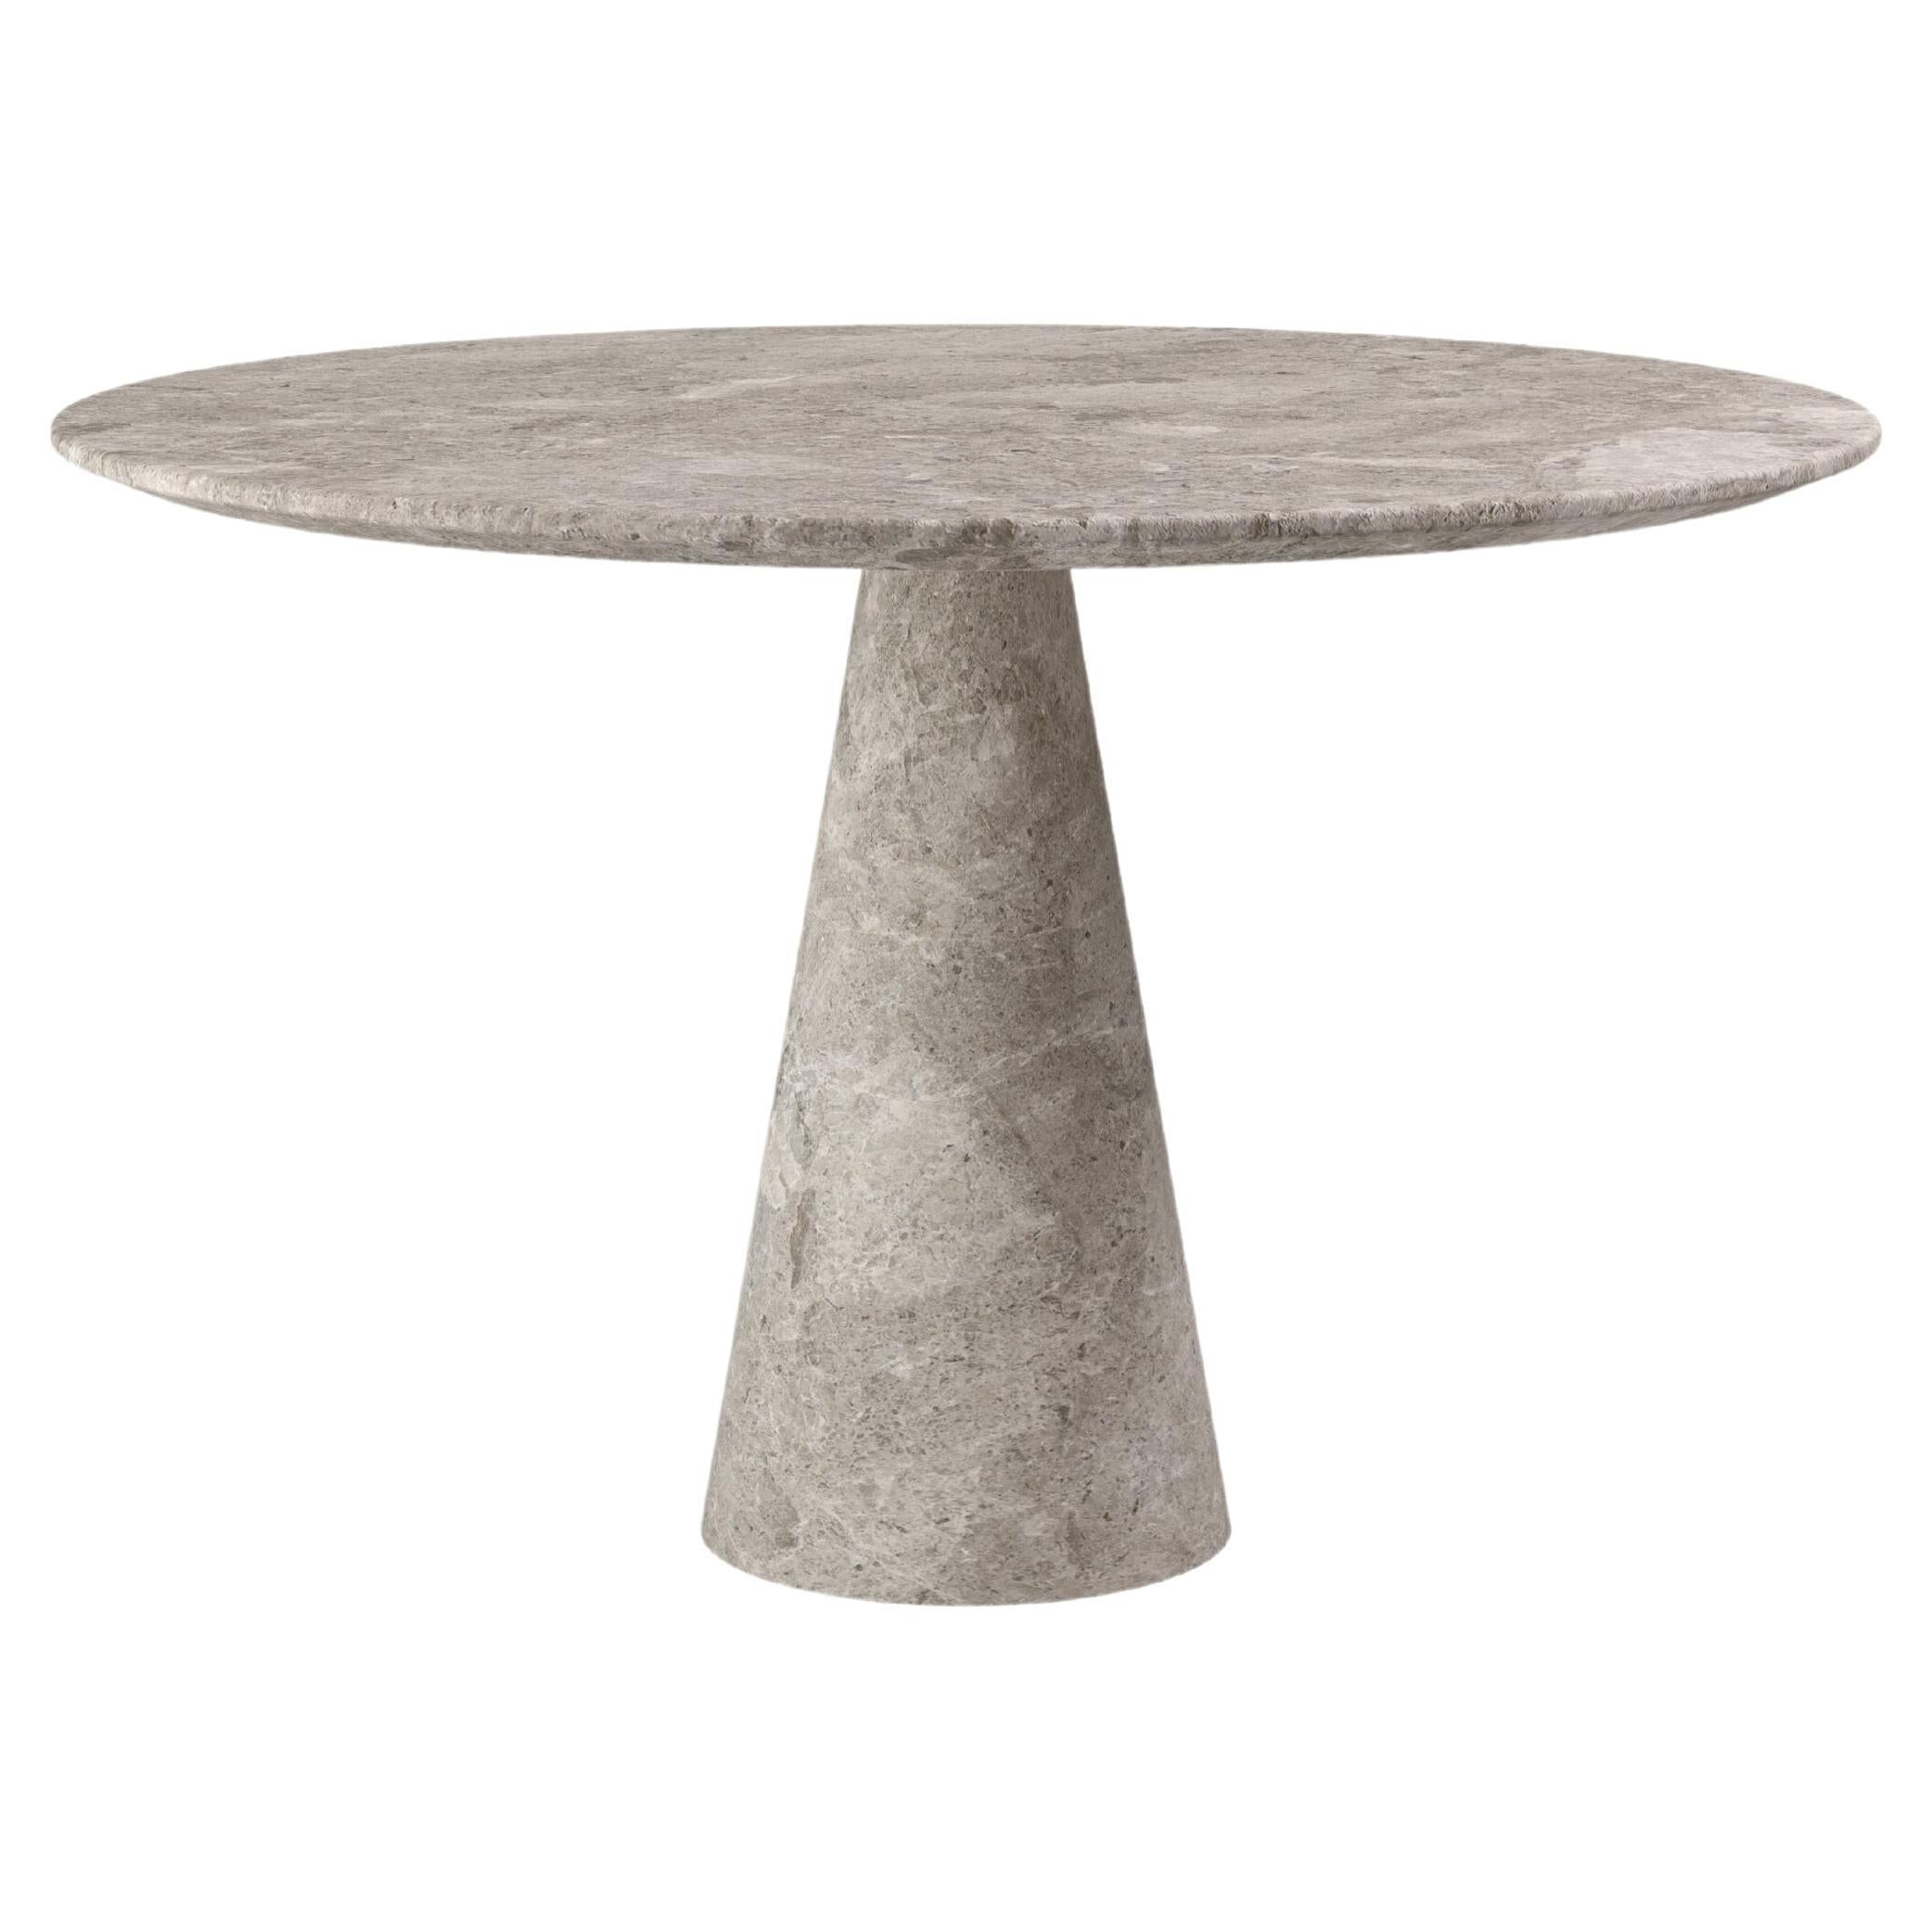 FORM(LA) Cono Round Dining Table 54”L x 54"W x 30”H Tundra Gray Marble